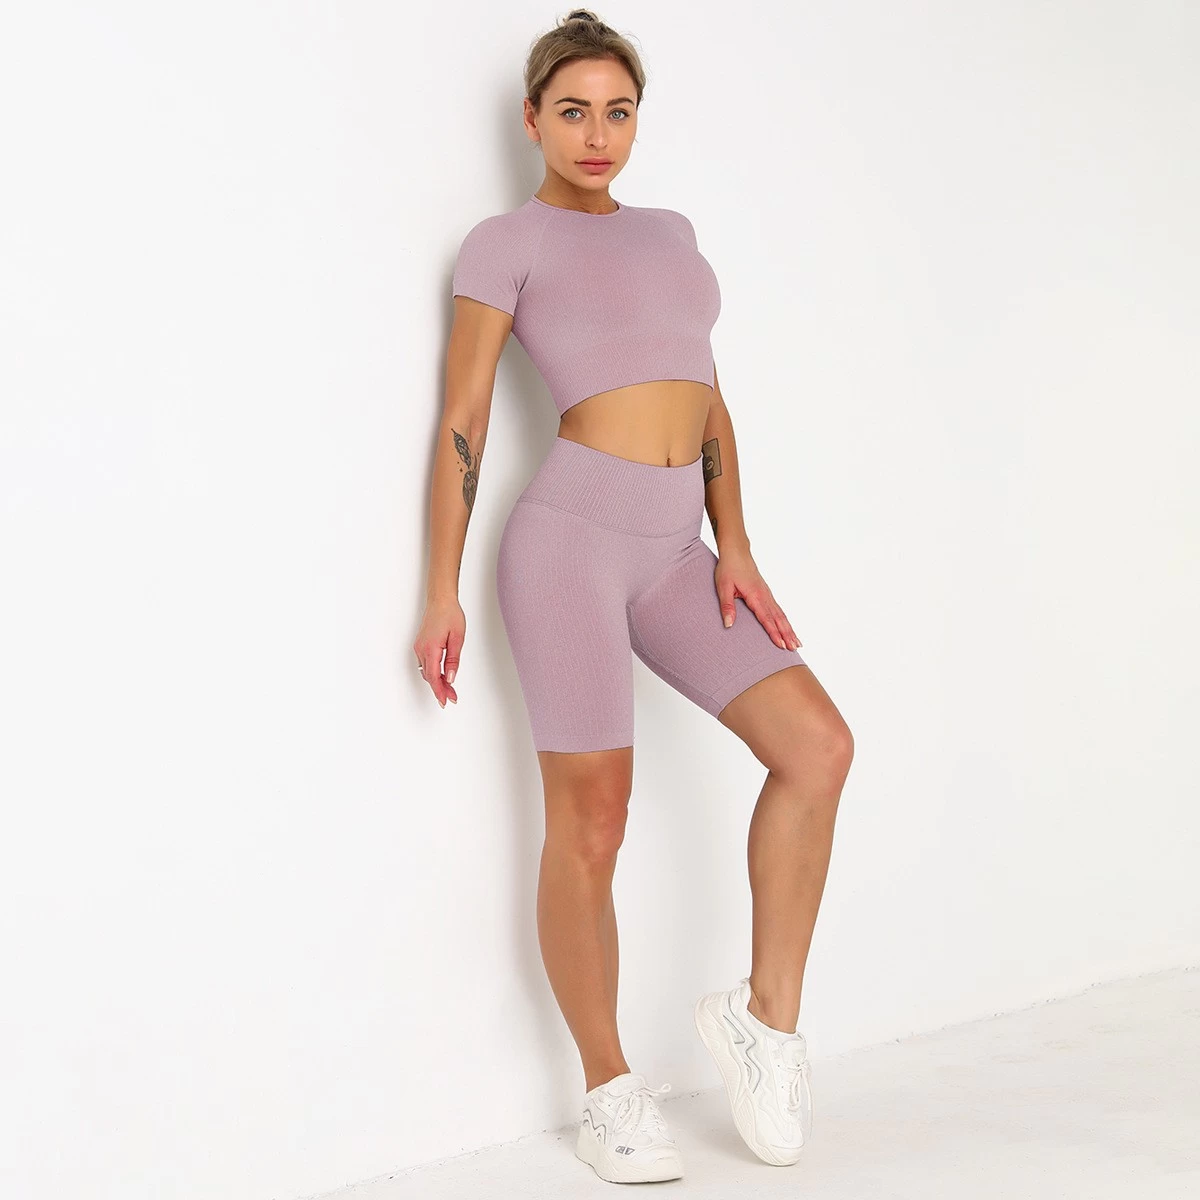 S-SHAPER Women Seamless Yoga Outfits 2 Piece Set Workout Gym Shorts + Short Sleeve Crop Top Manufacturer